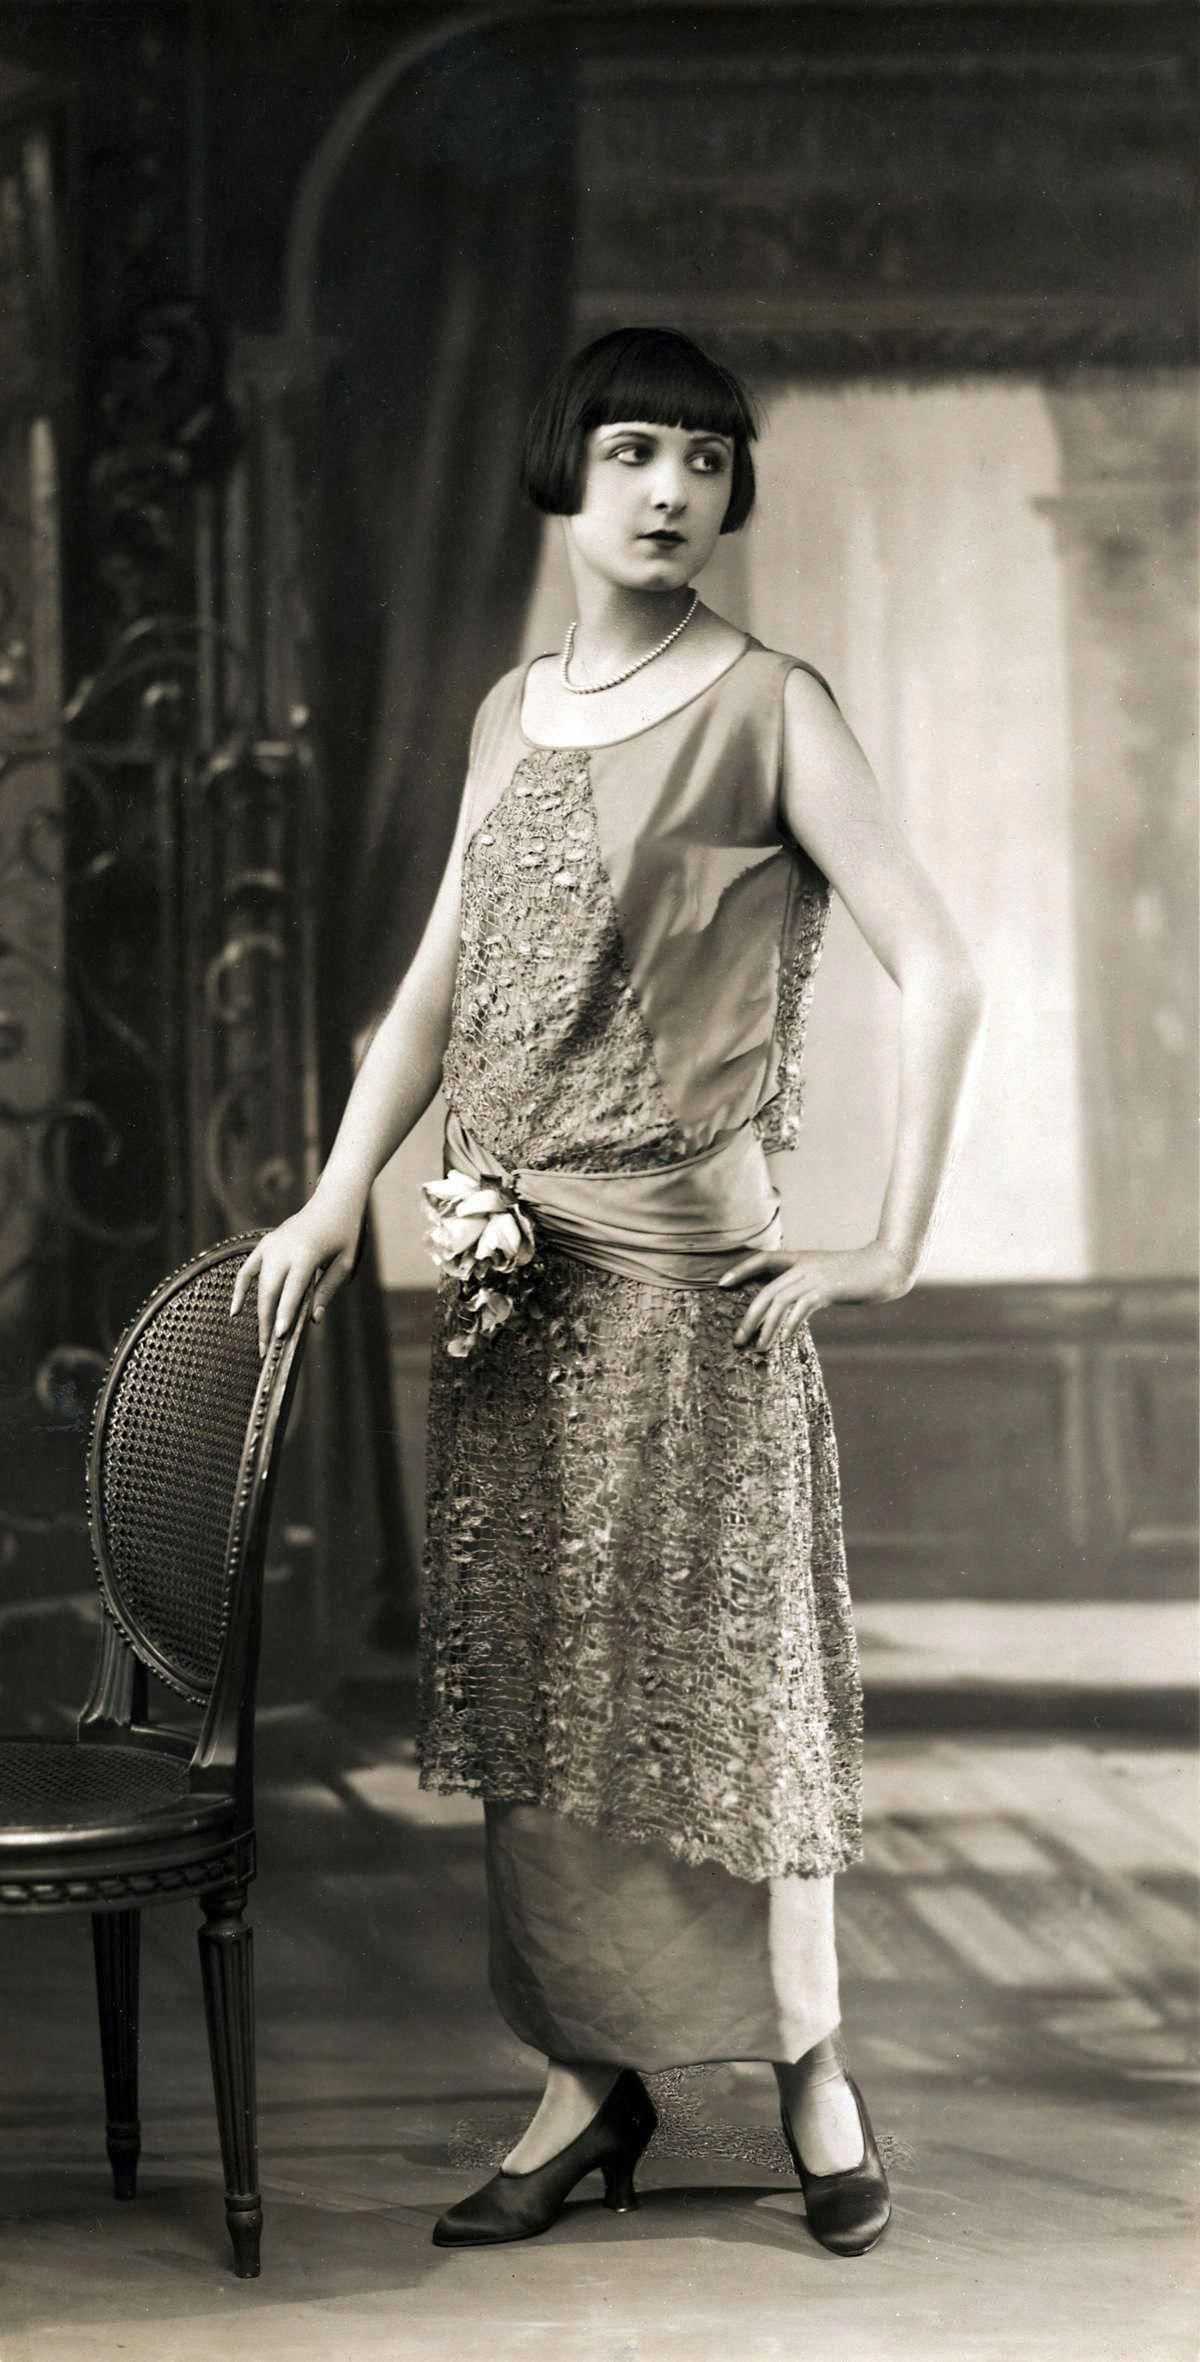 Фото 20х. Мода 20-х годов 20-го века. 20е годы 20 века мода. Мода ар деко 20х. Мода 20х годов 20 века женщины в Испании.